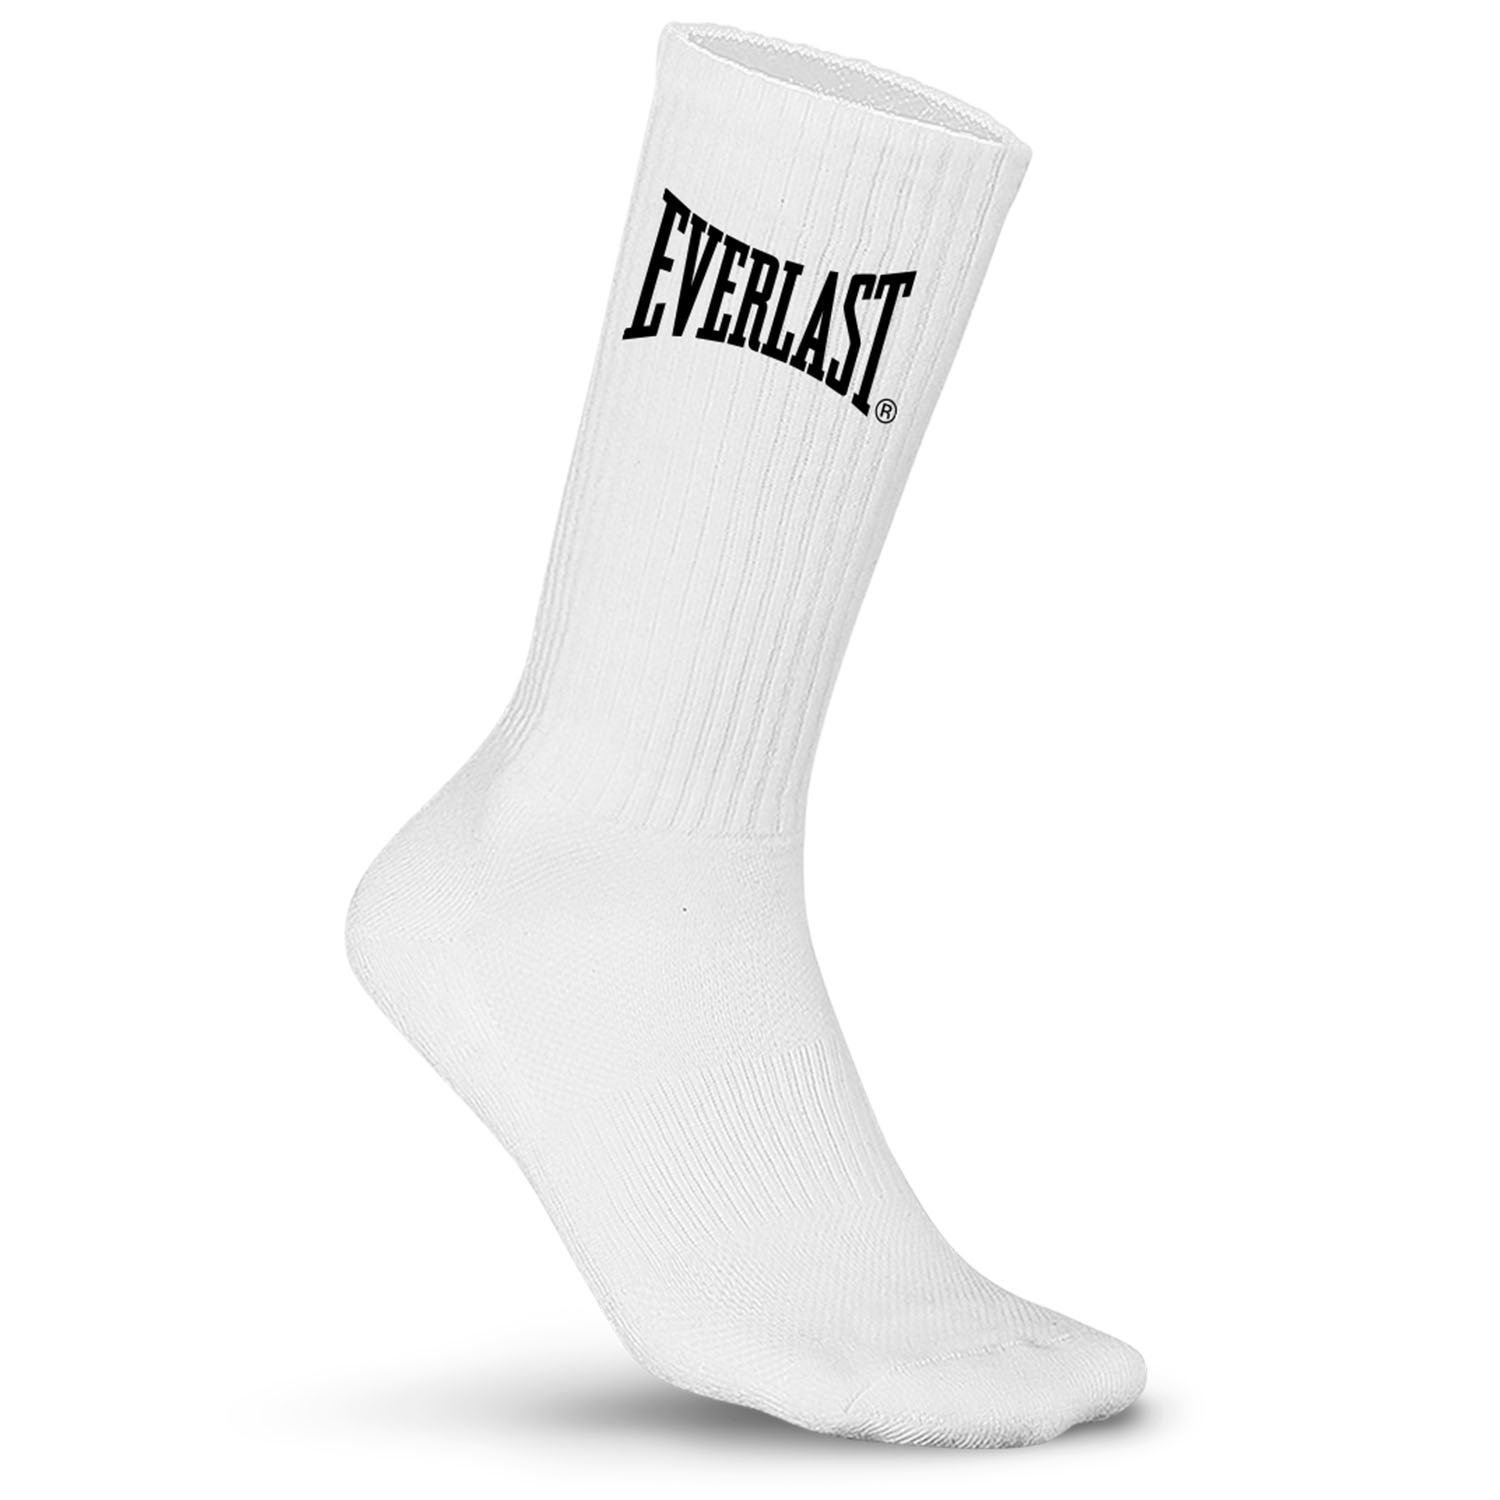 Everlast Socken, 10er Pack, weiß, 39-42